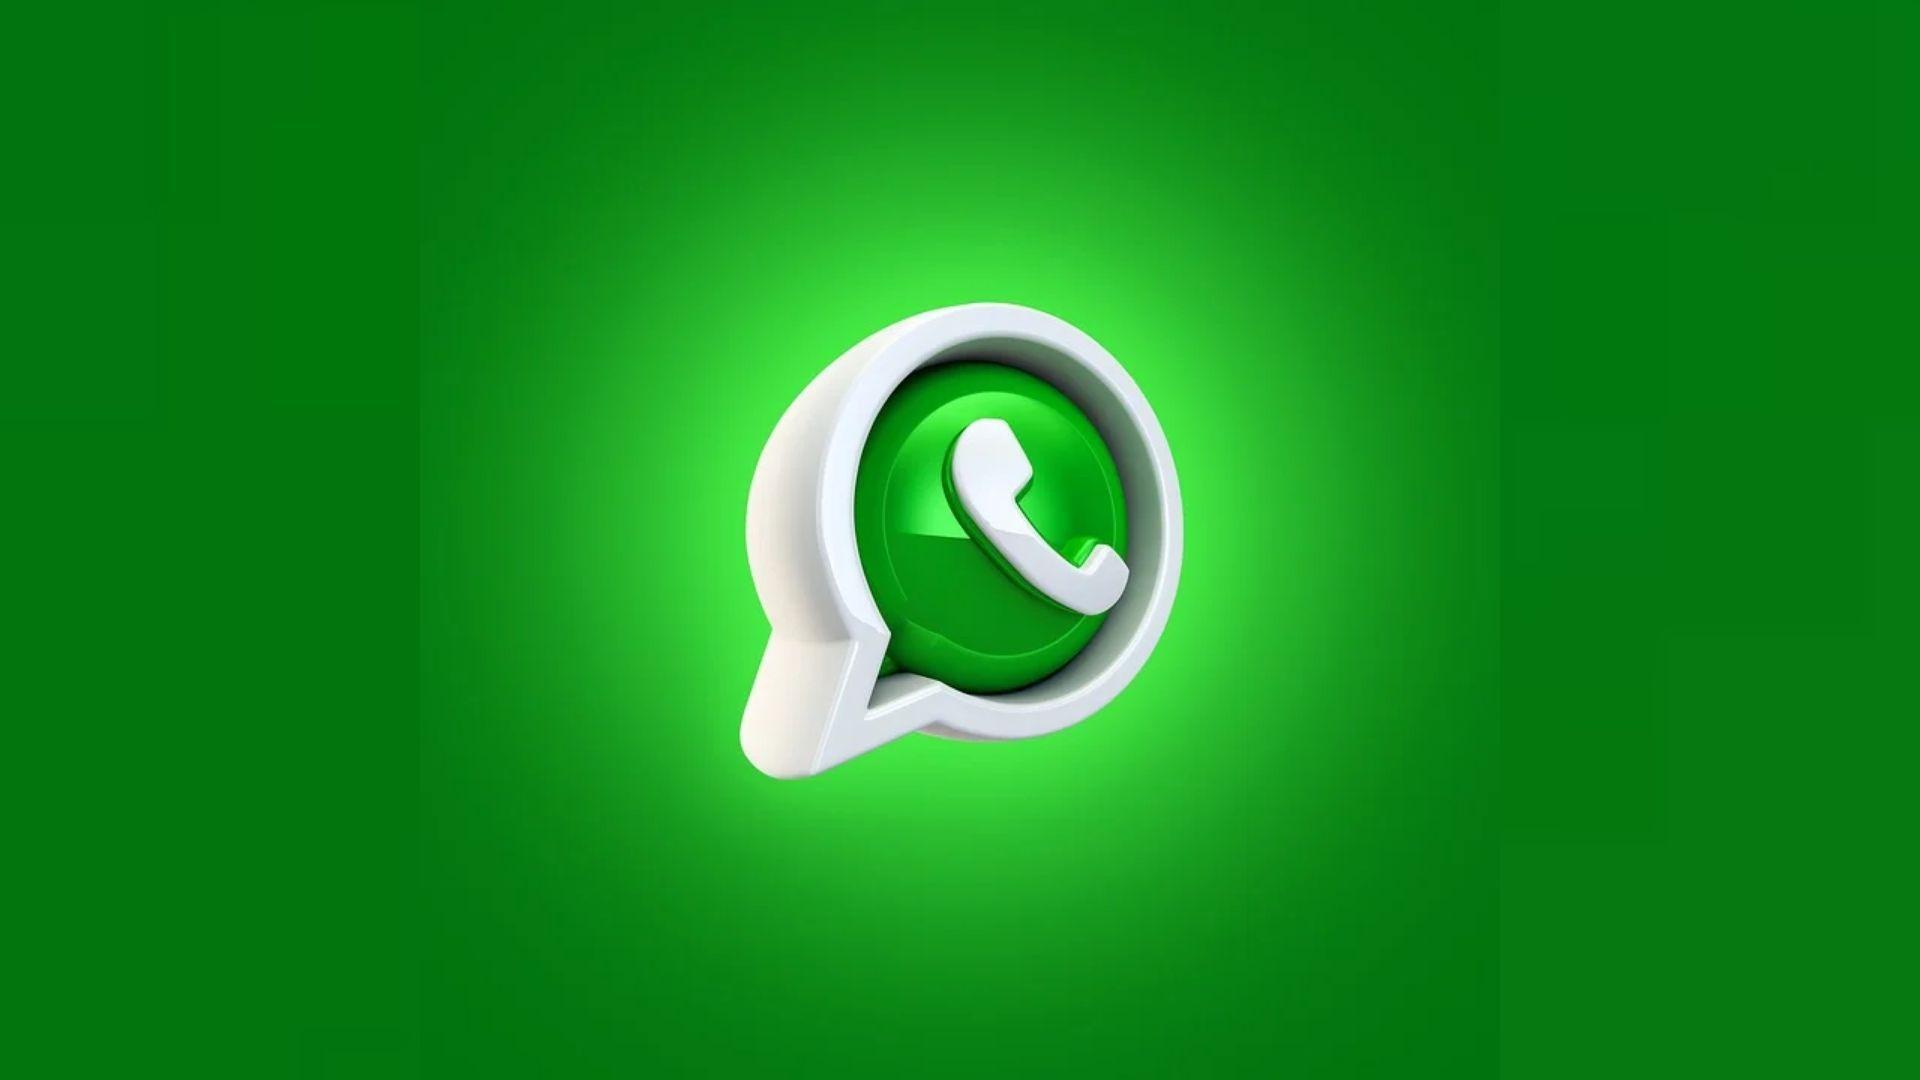 whatsapp logo image hd